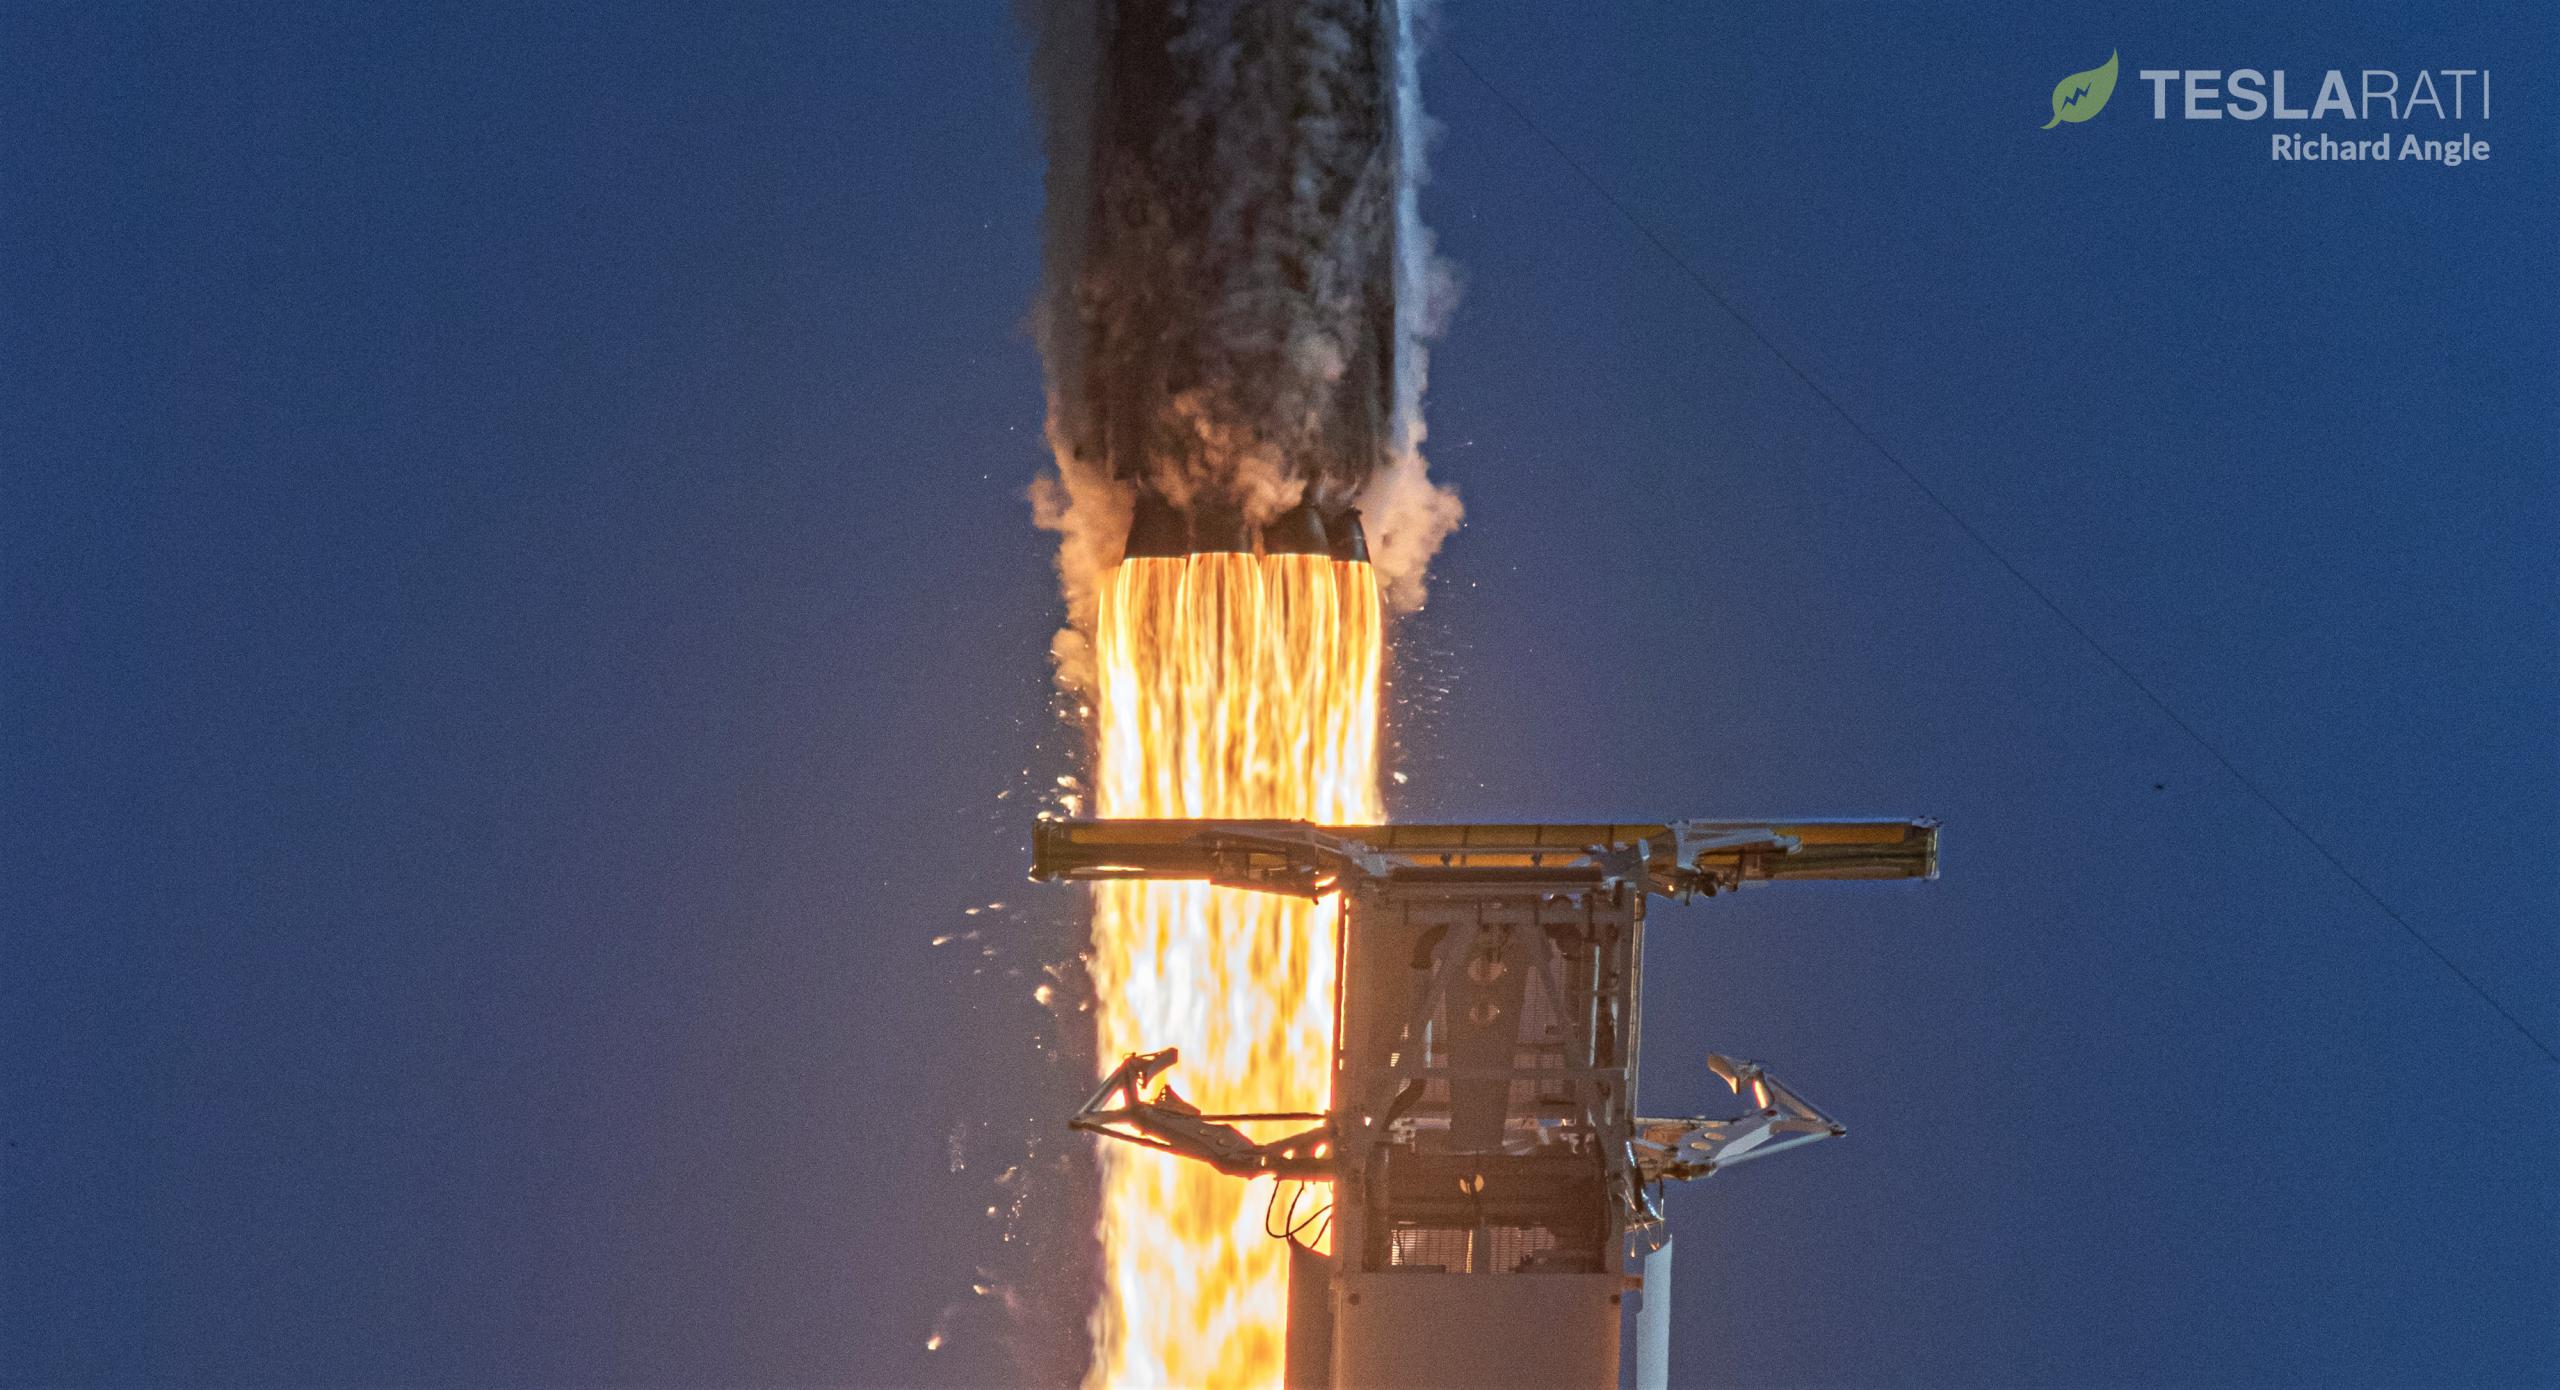 Starlink-11 Falcon 9 B1060 LC-39A 090320 (Richard Angle) launch 7 crop (c)